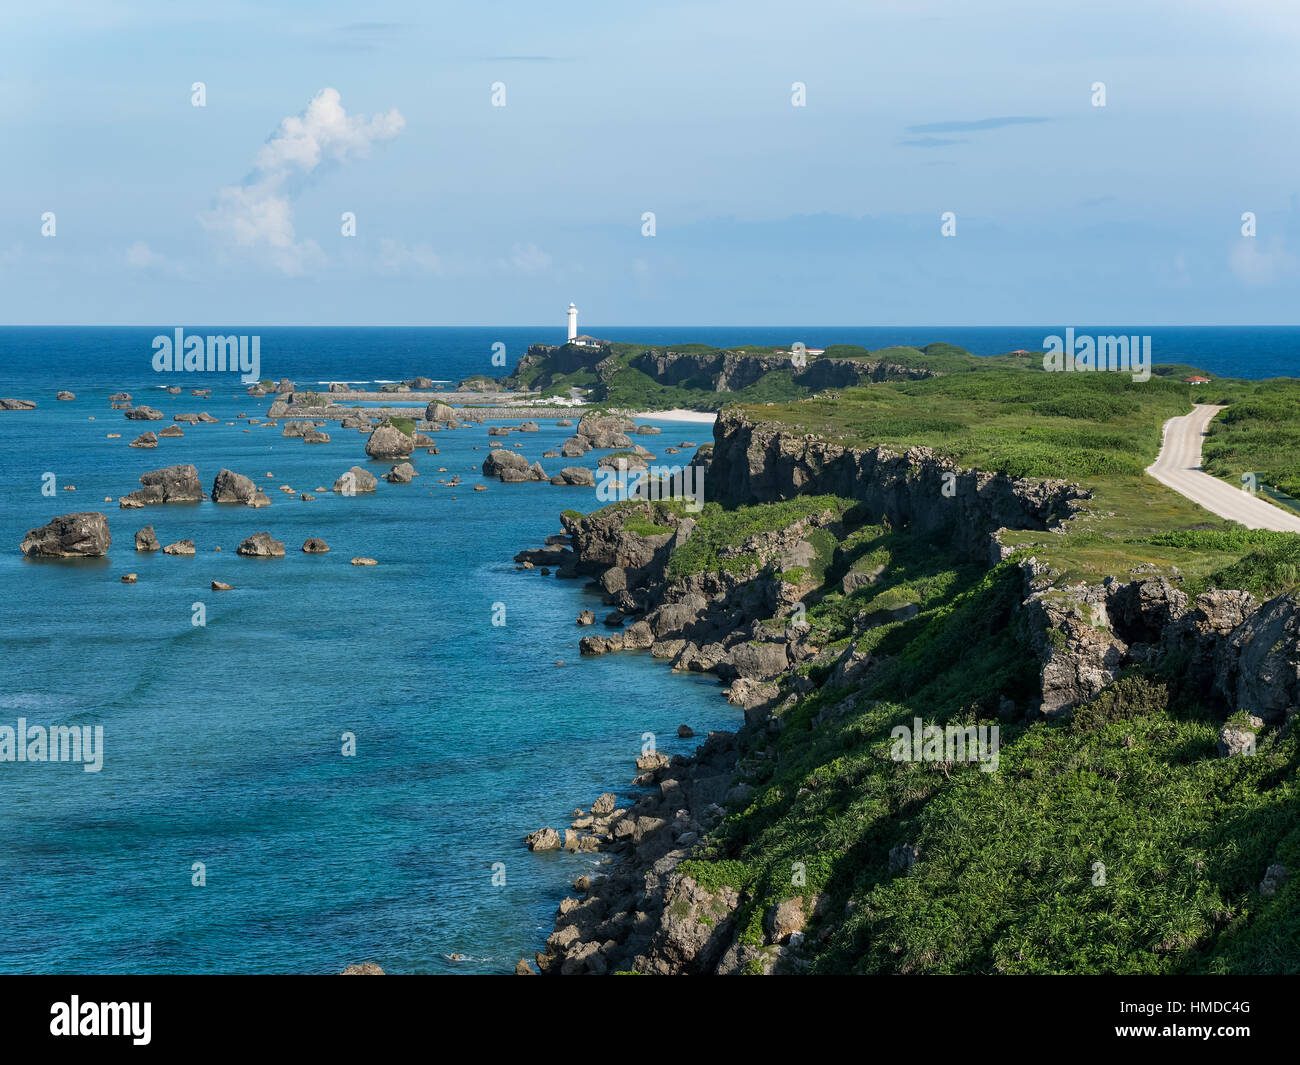 Cape of Higashi Henna Zaki of Miyako Island in Okinawa, Japan. Stock Photo